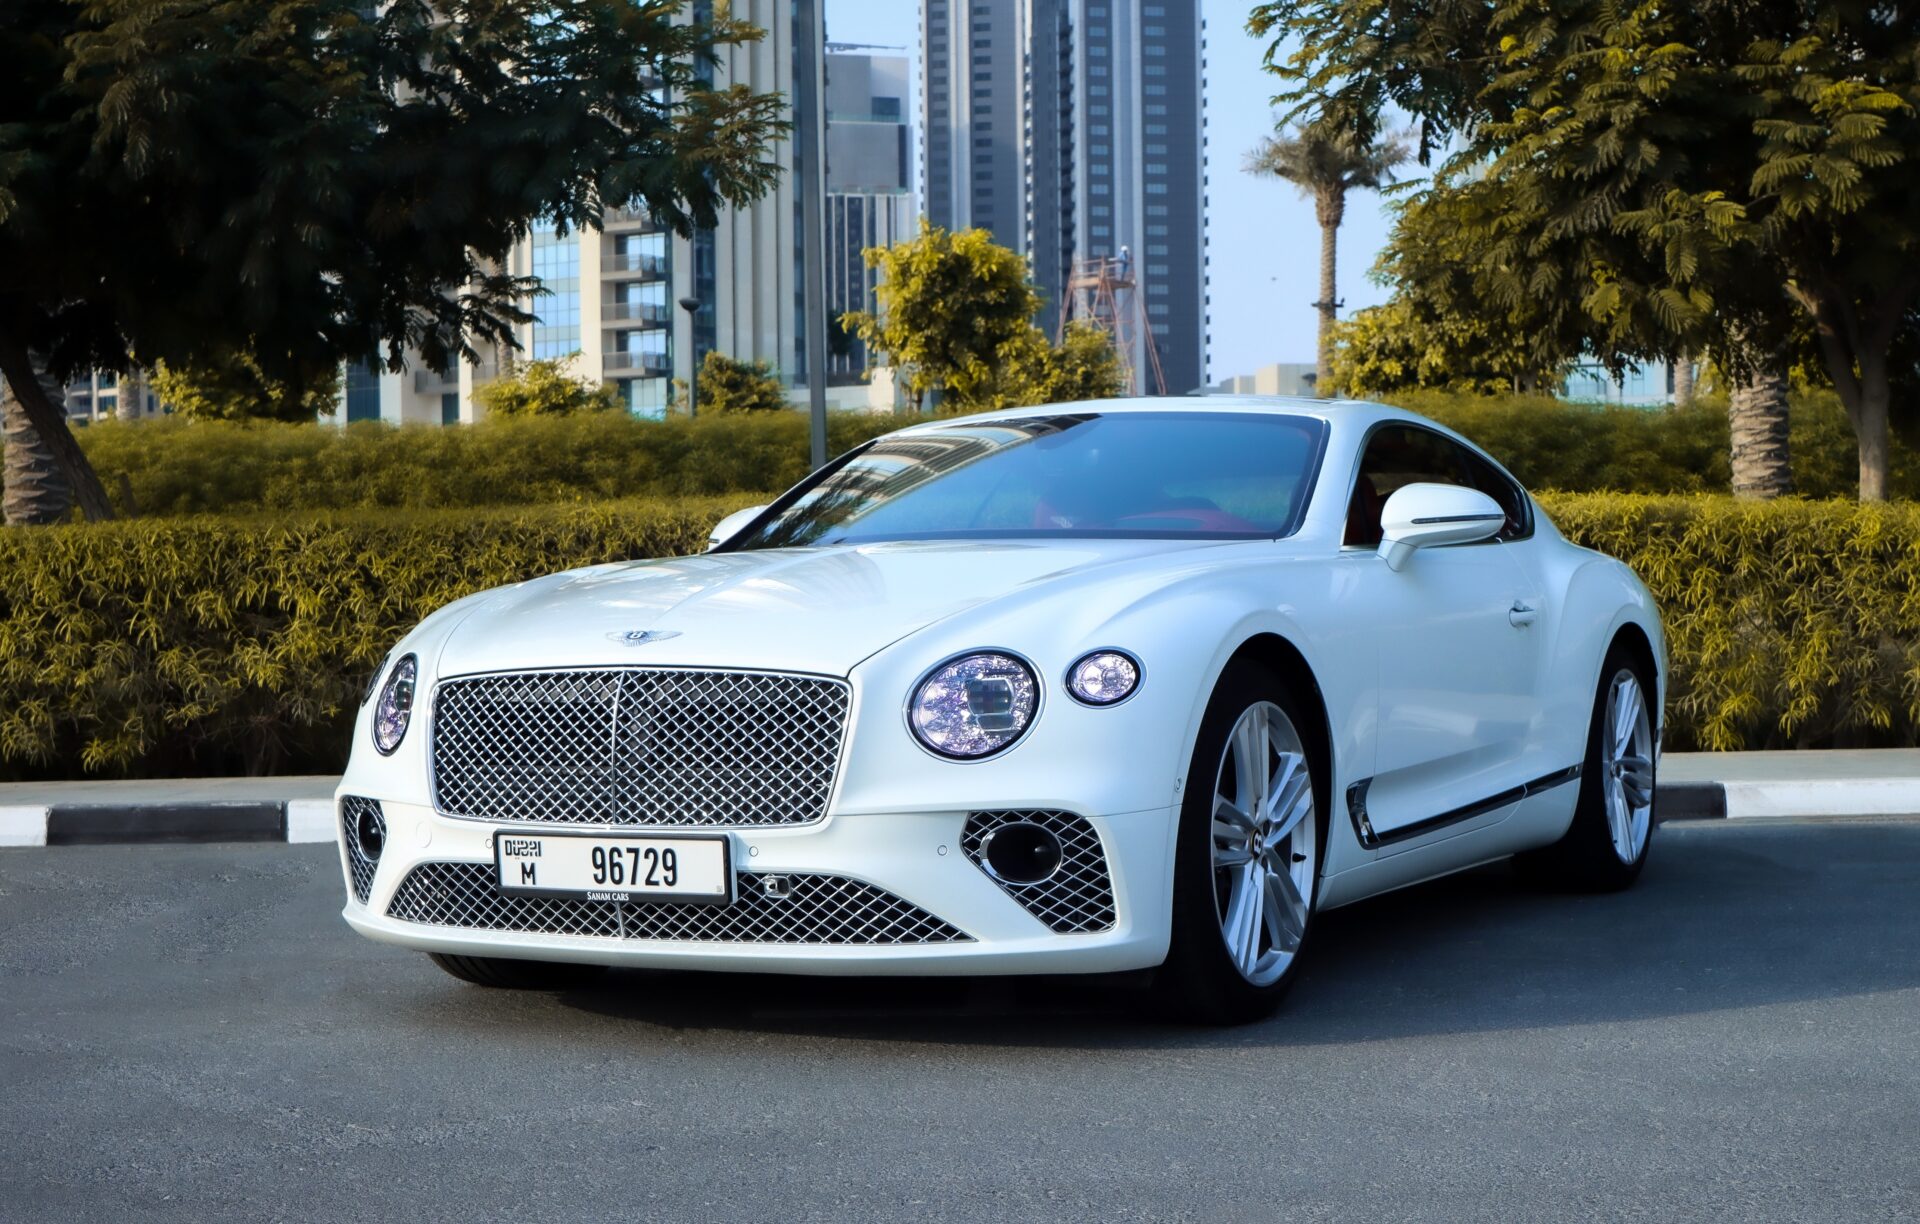 Rent a Bentley Sports car in rental Dubai: Experience Luxury on Wheels